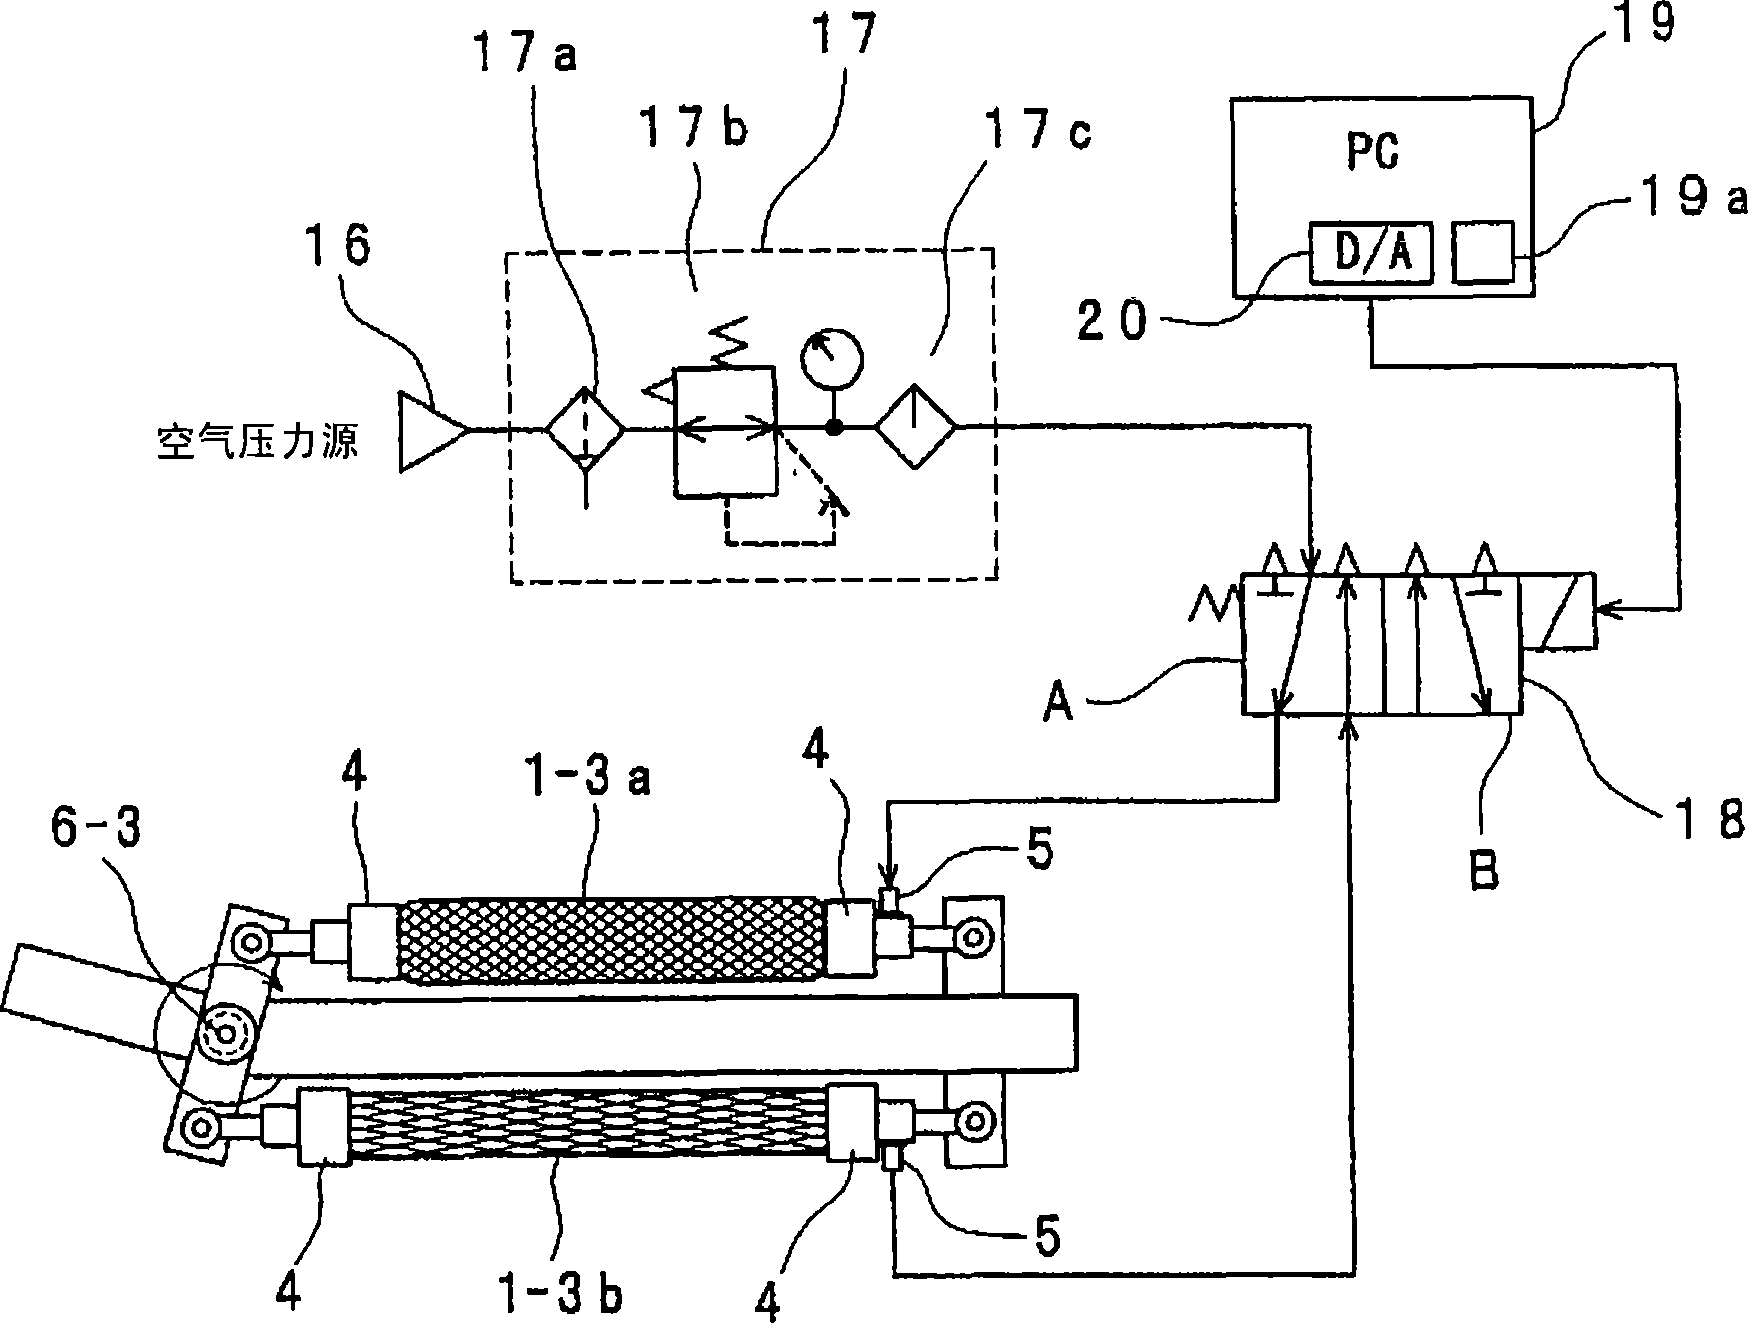 Apparatus and method for controlling elastic actuator